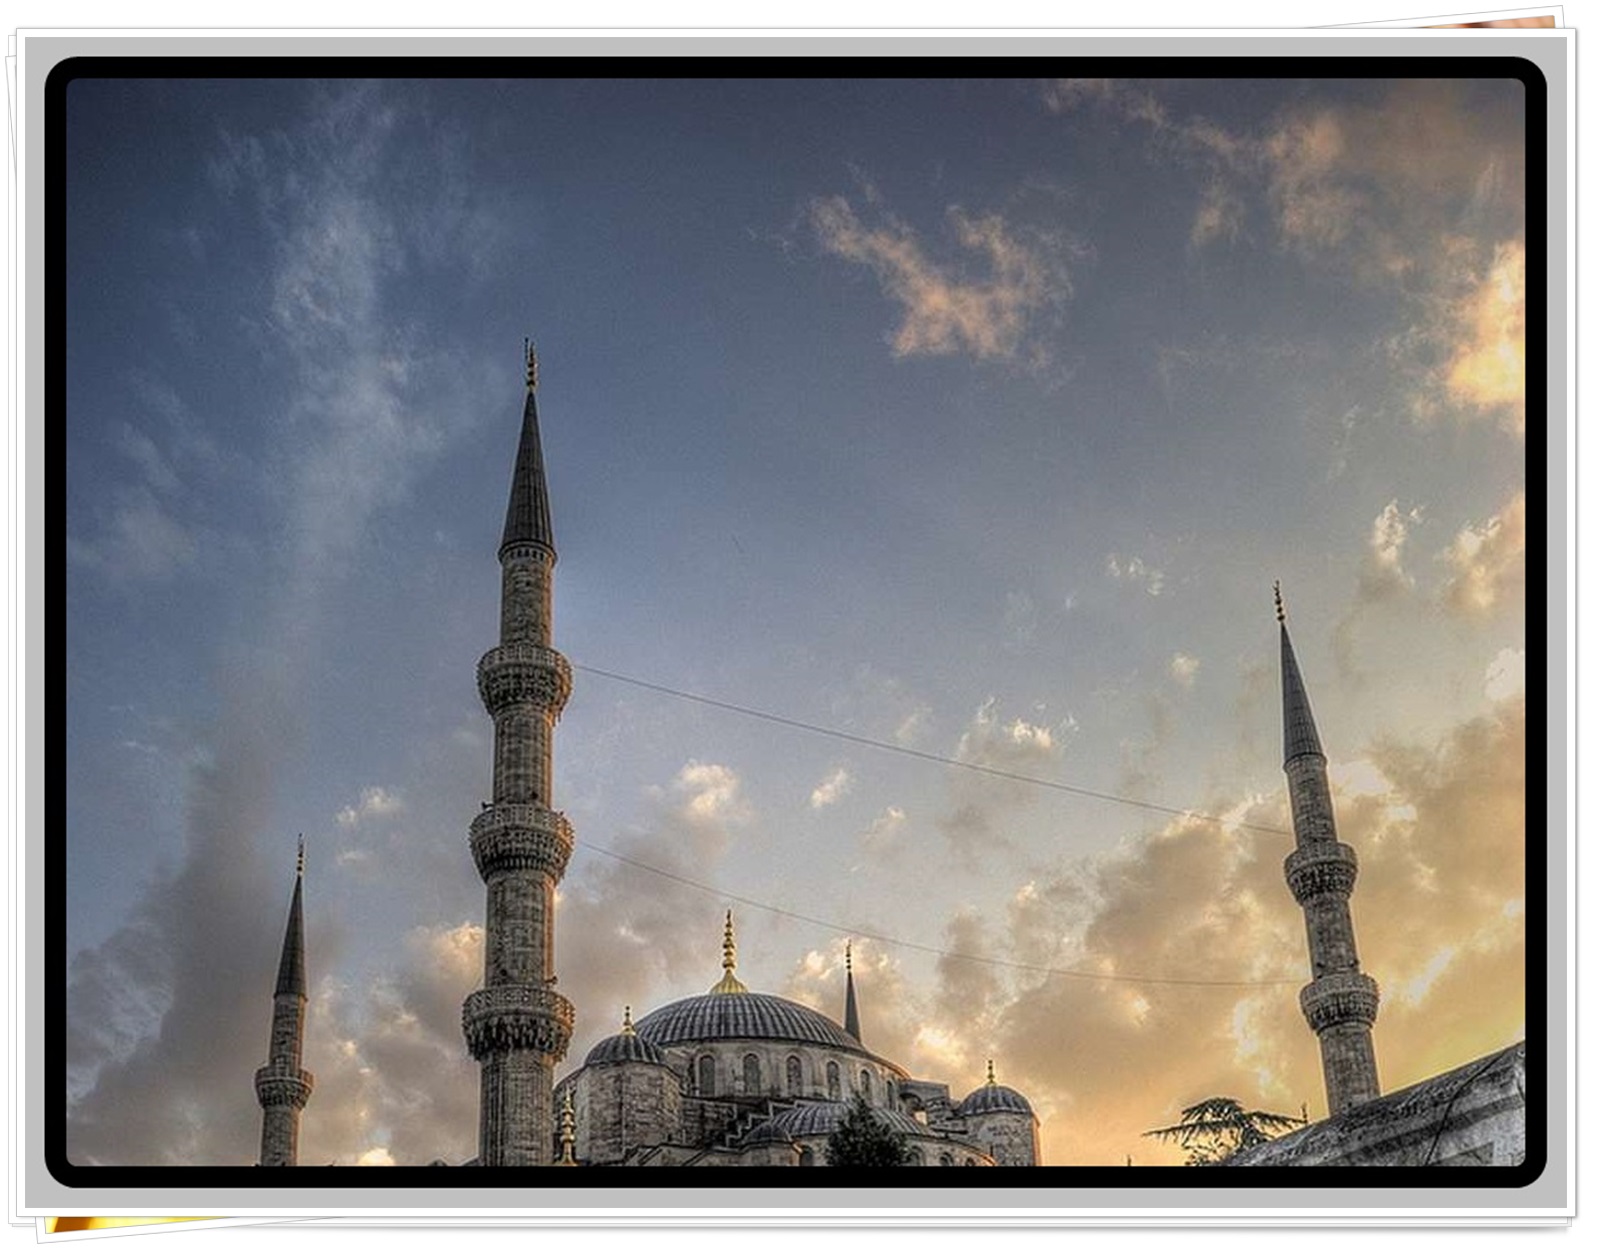 Wallpaper Islami Keren Gratis - Sultan Ahmed Mosque - HD Wallpaper 